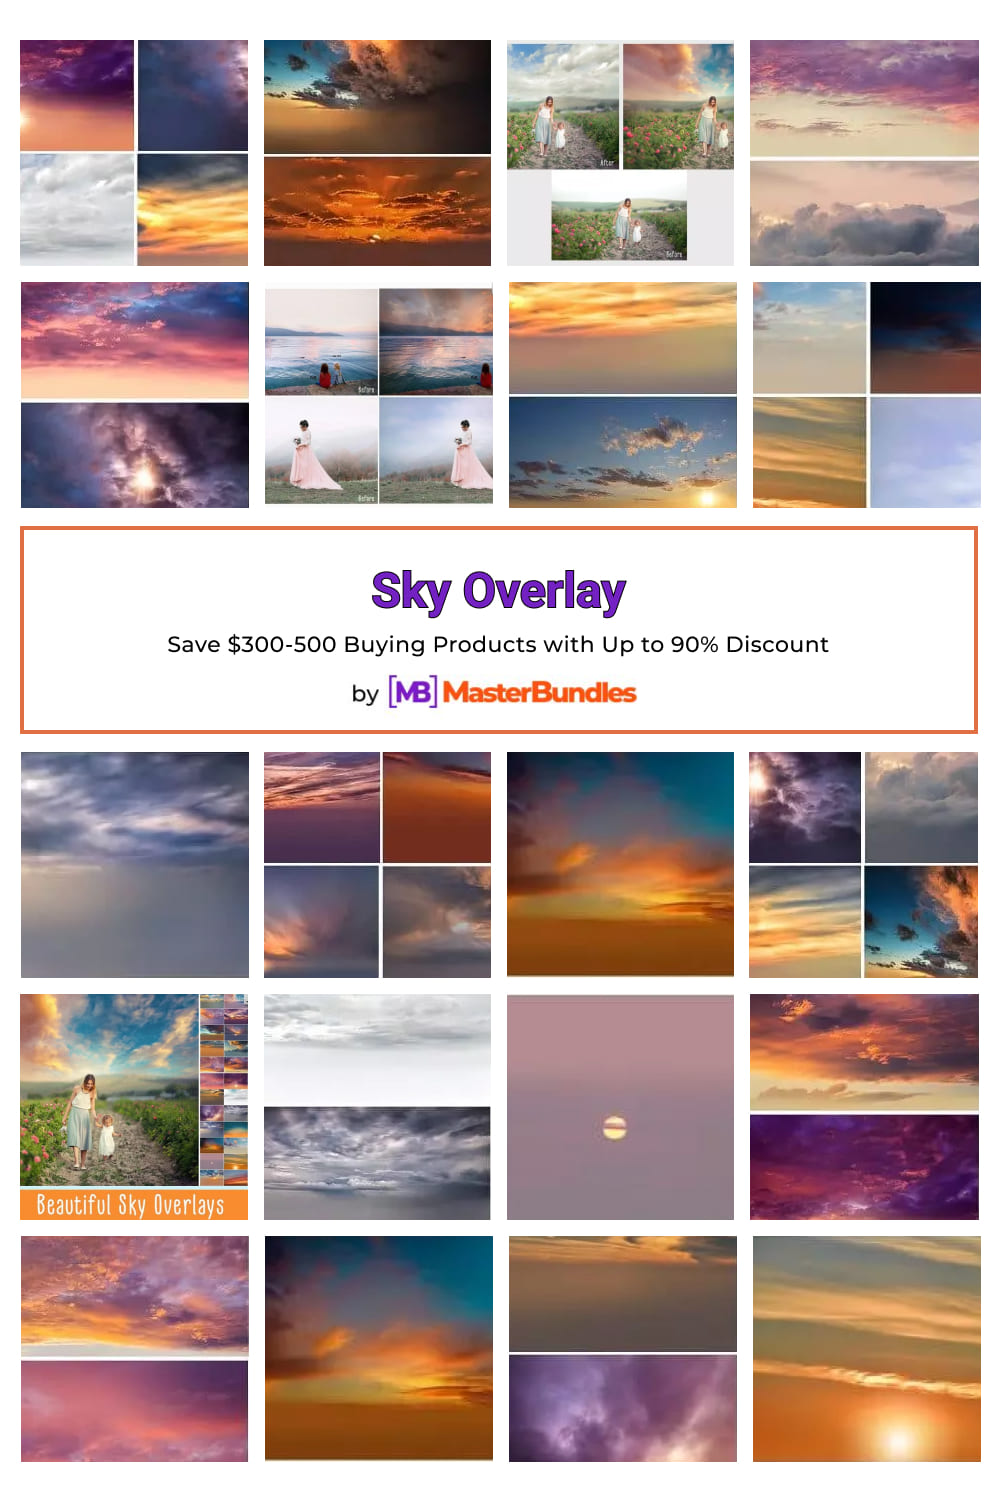 Sky Overlay Pinterest image.